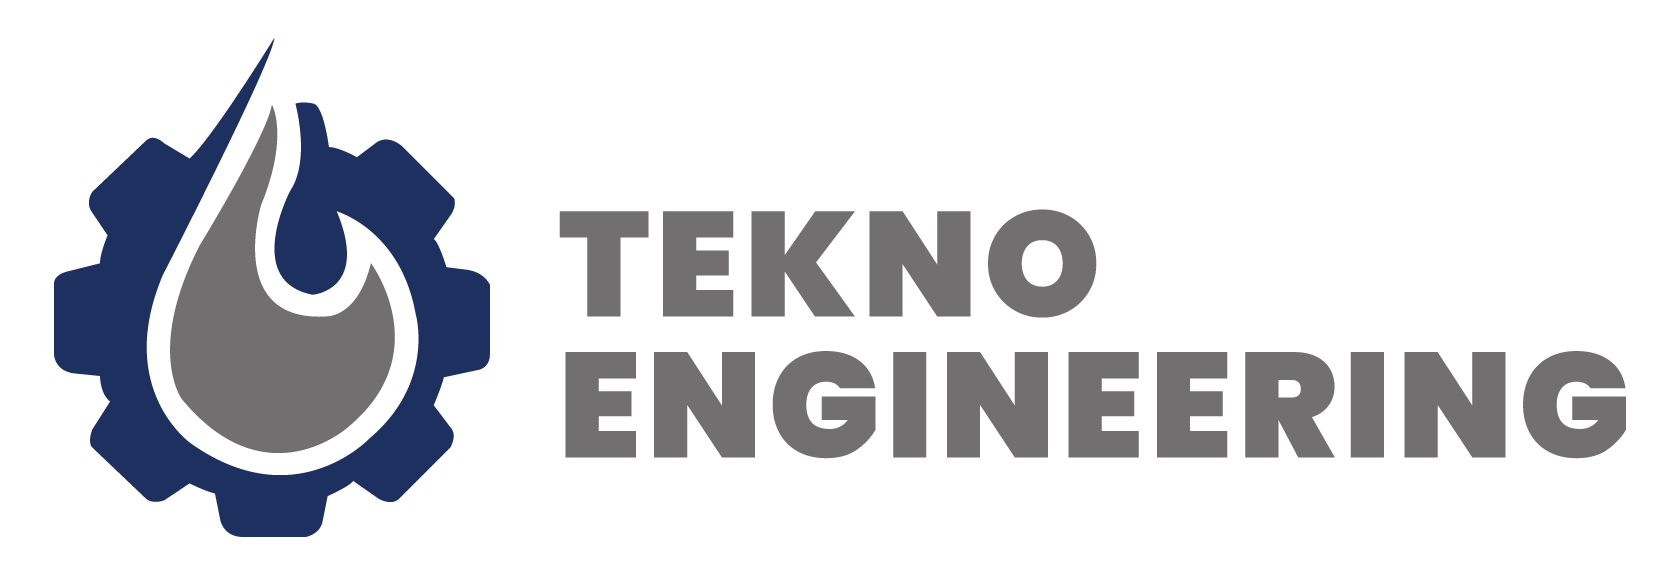 Tekno Engineering.com